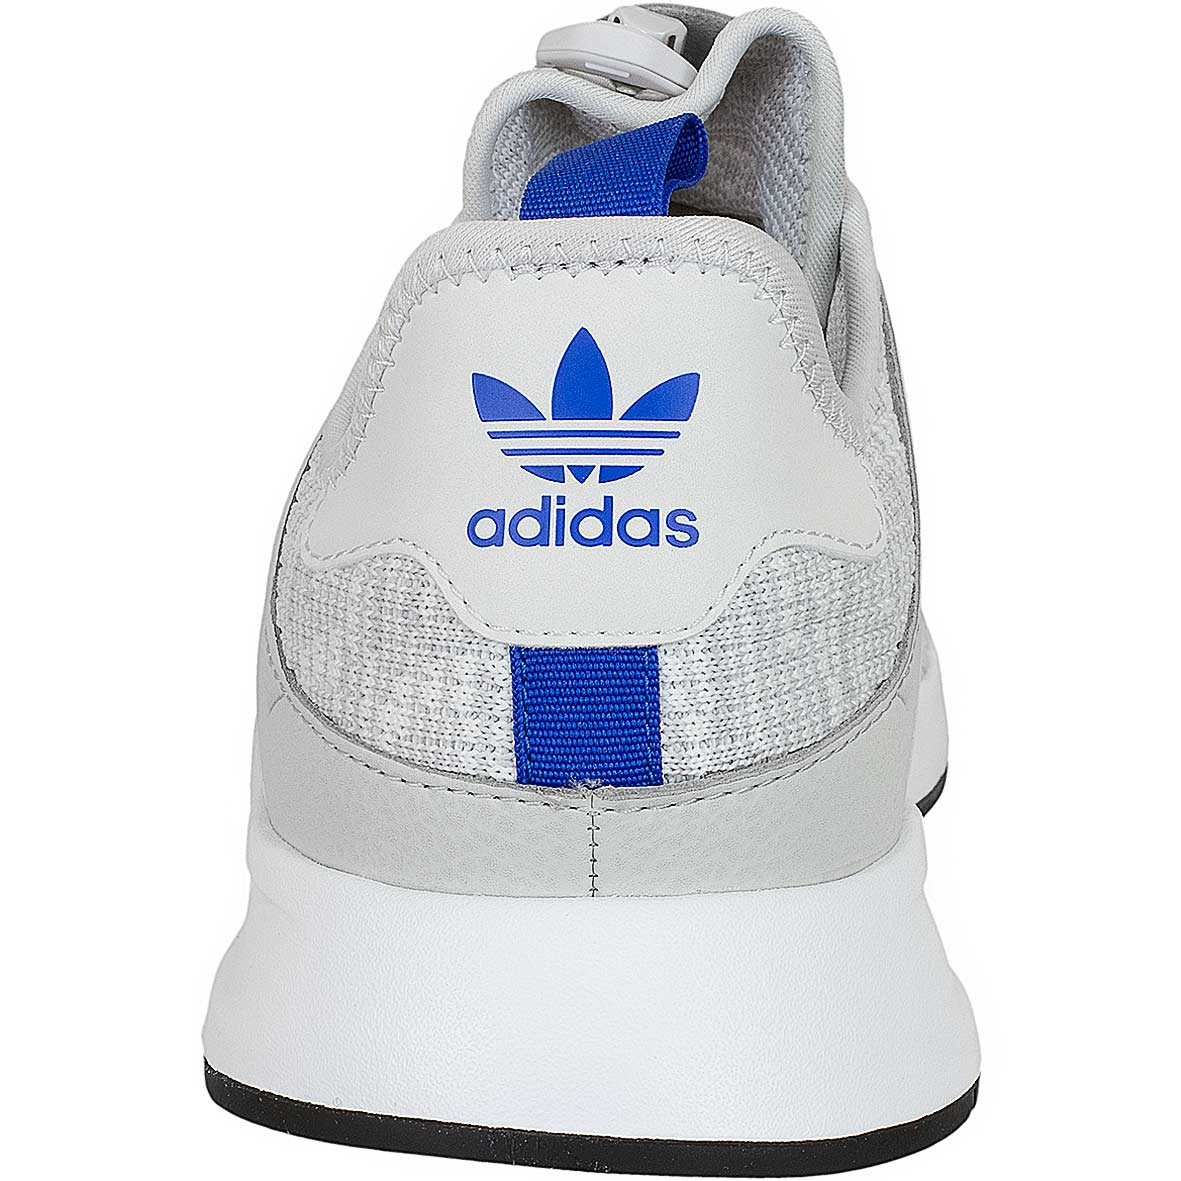 ☆ Adidas Originals Sneaker X PLR hellgrau - hier bestellen!